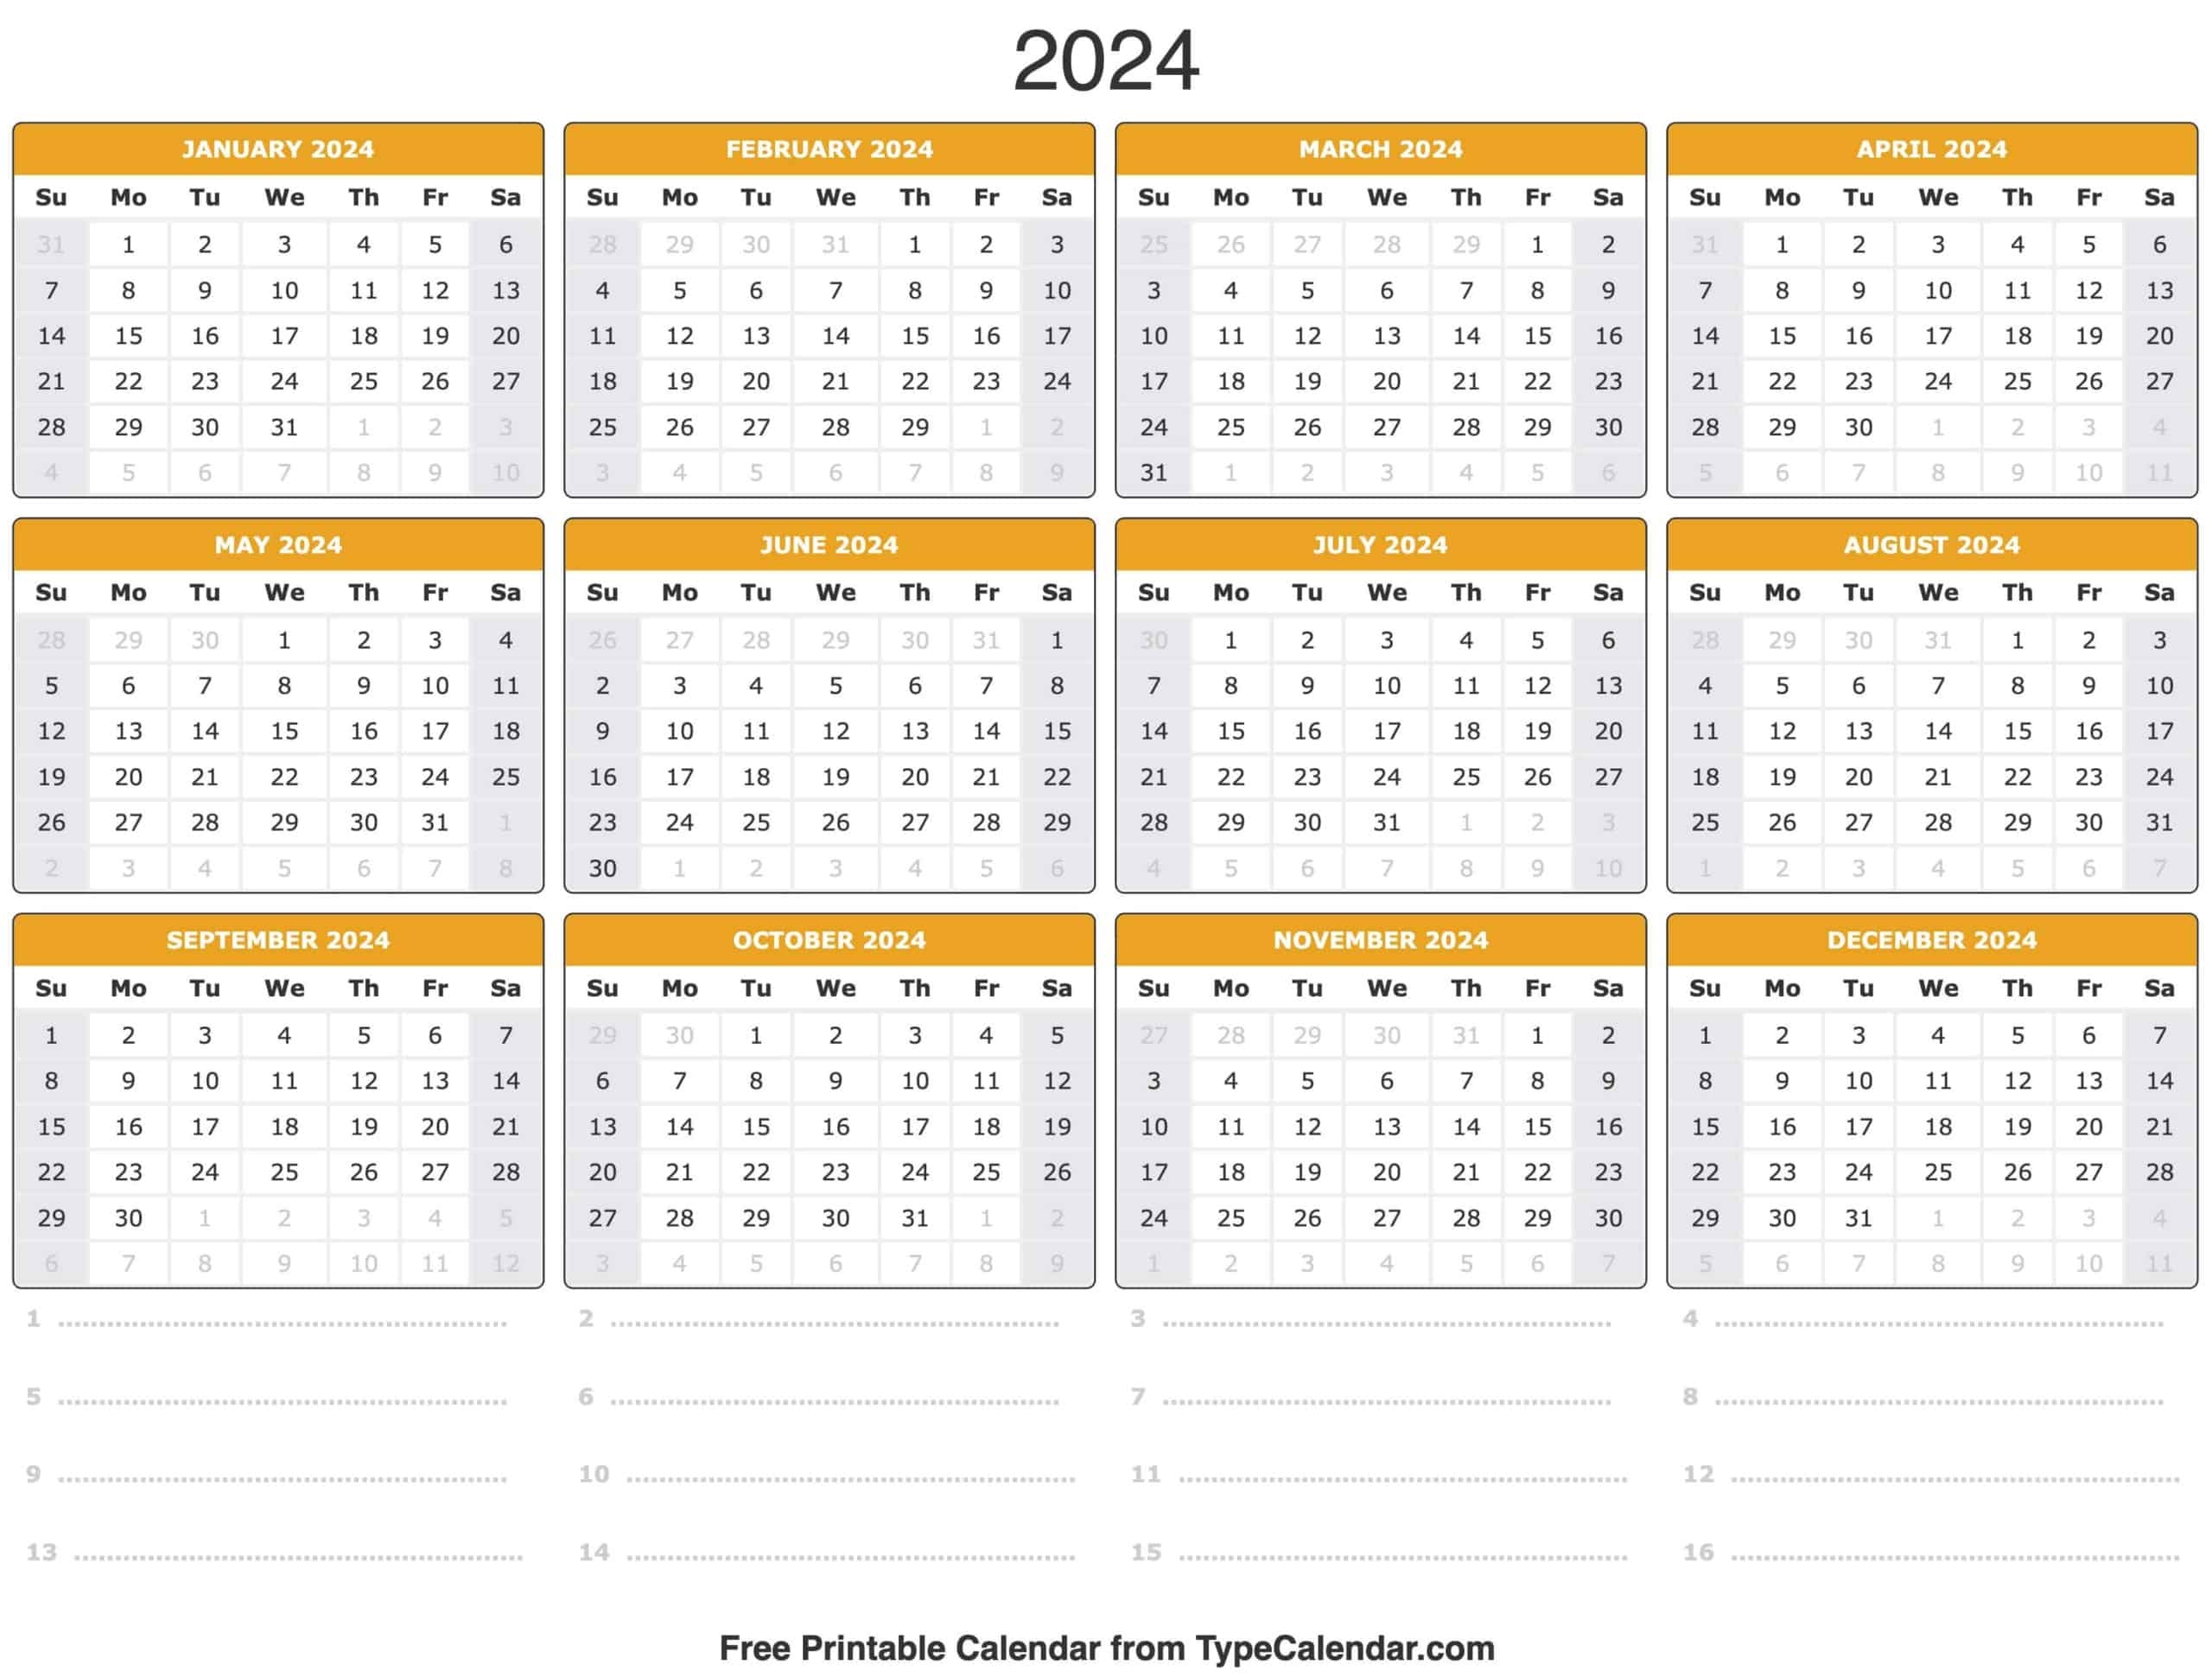 2024 Calendar: Free Printable Calendar With Holidays in Free Printable Calendar 2024 Date And Time